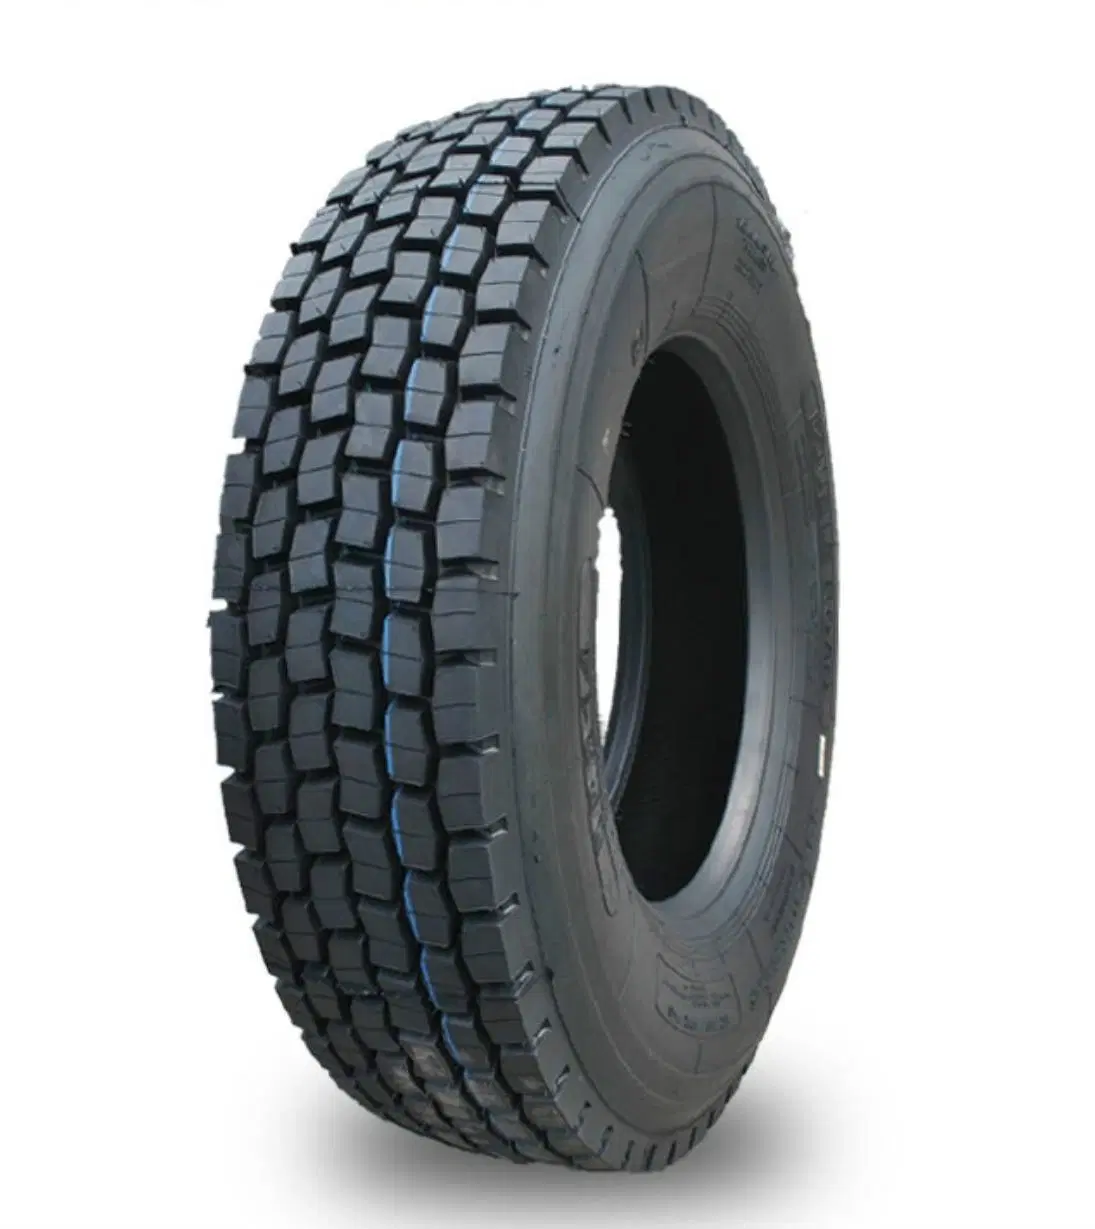 Factory Wholesale 18inch Mt PCR Tyres / 4X4 Truck Tires / Radial Car Tire 265/60r18lt 285/60r18lt 265/70r18lt 235/65r18lt 285/65r18lt R/T Rugged-Terrain Tires